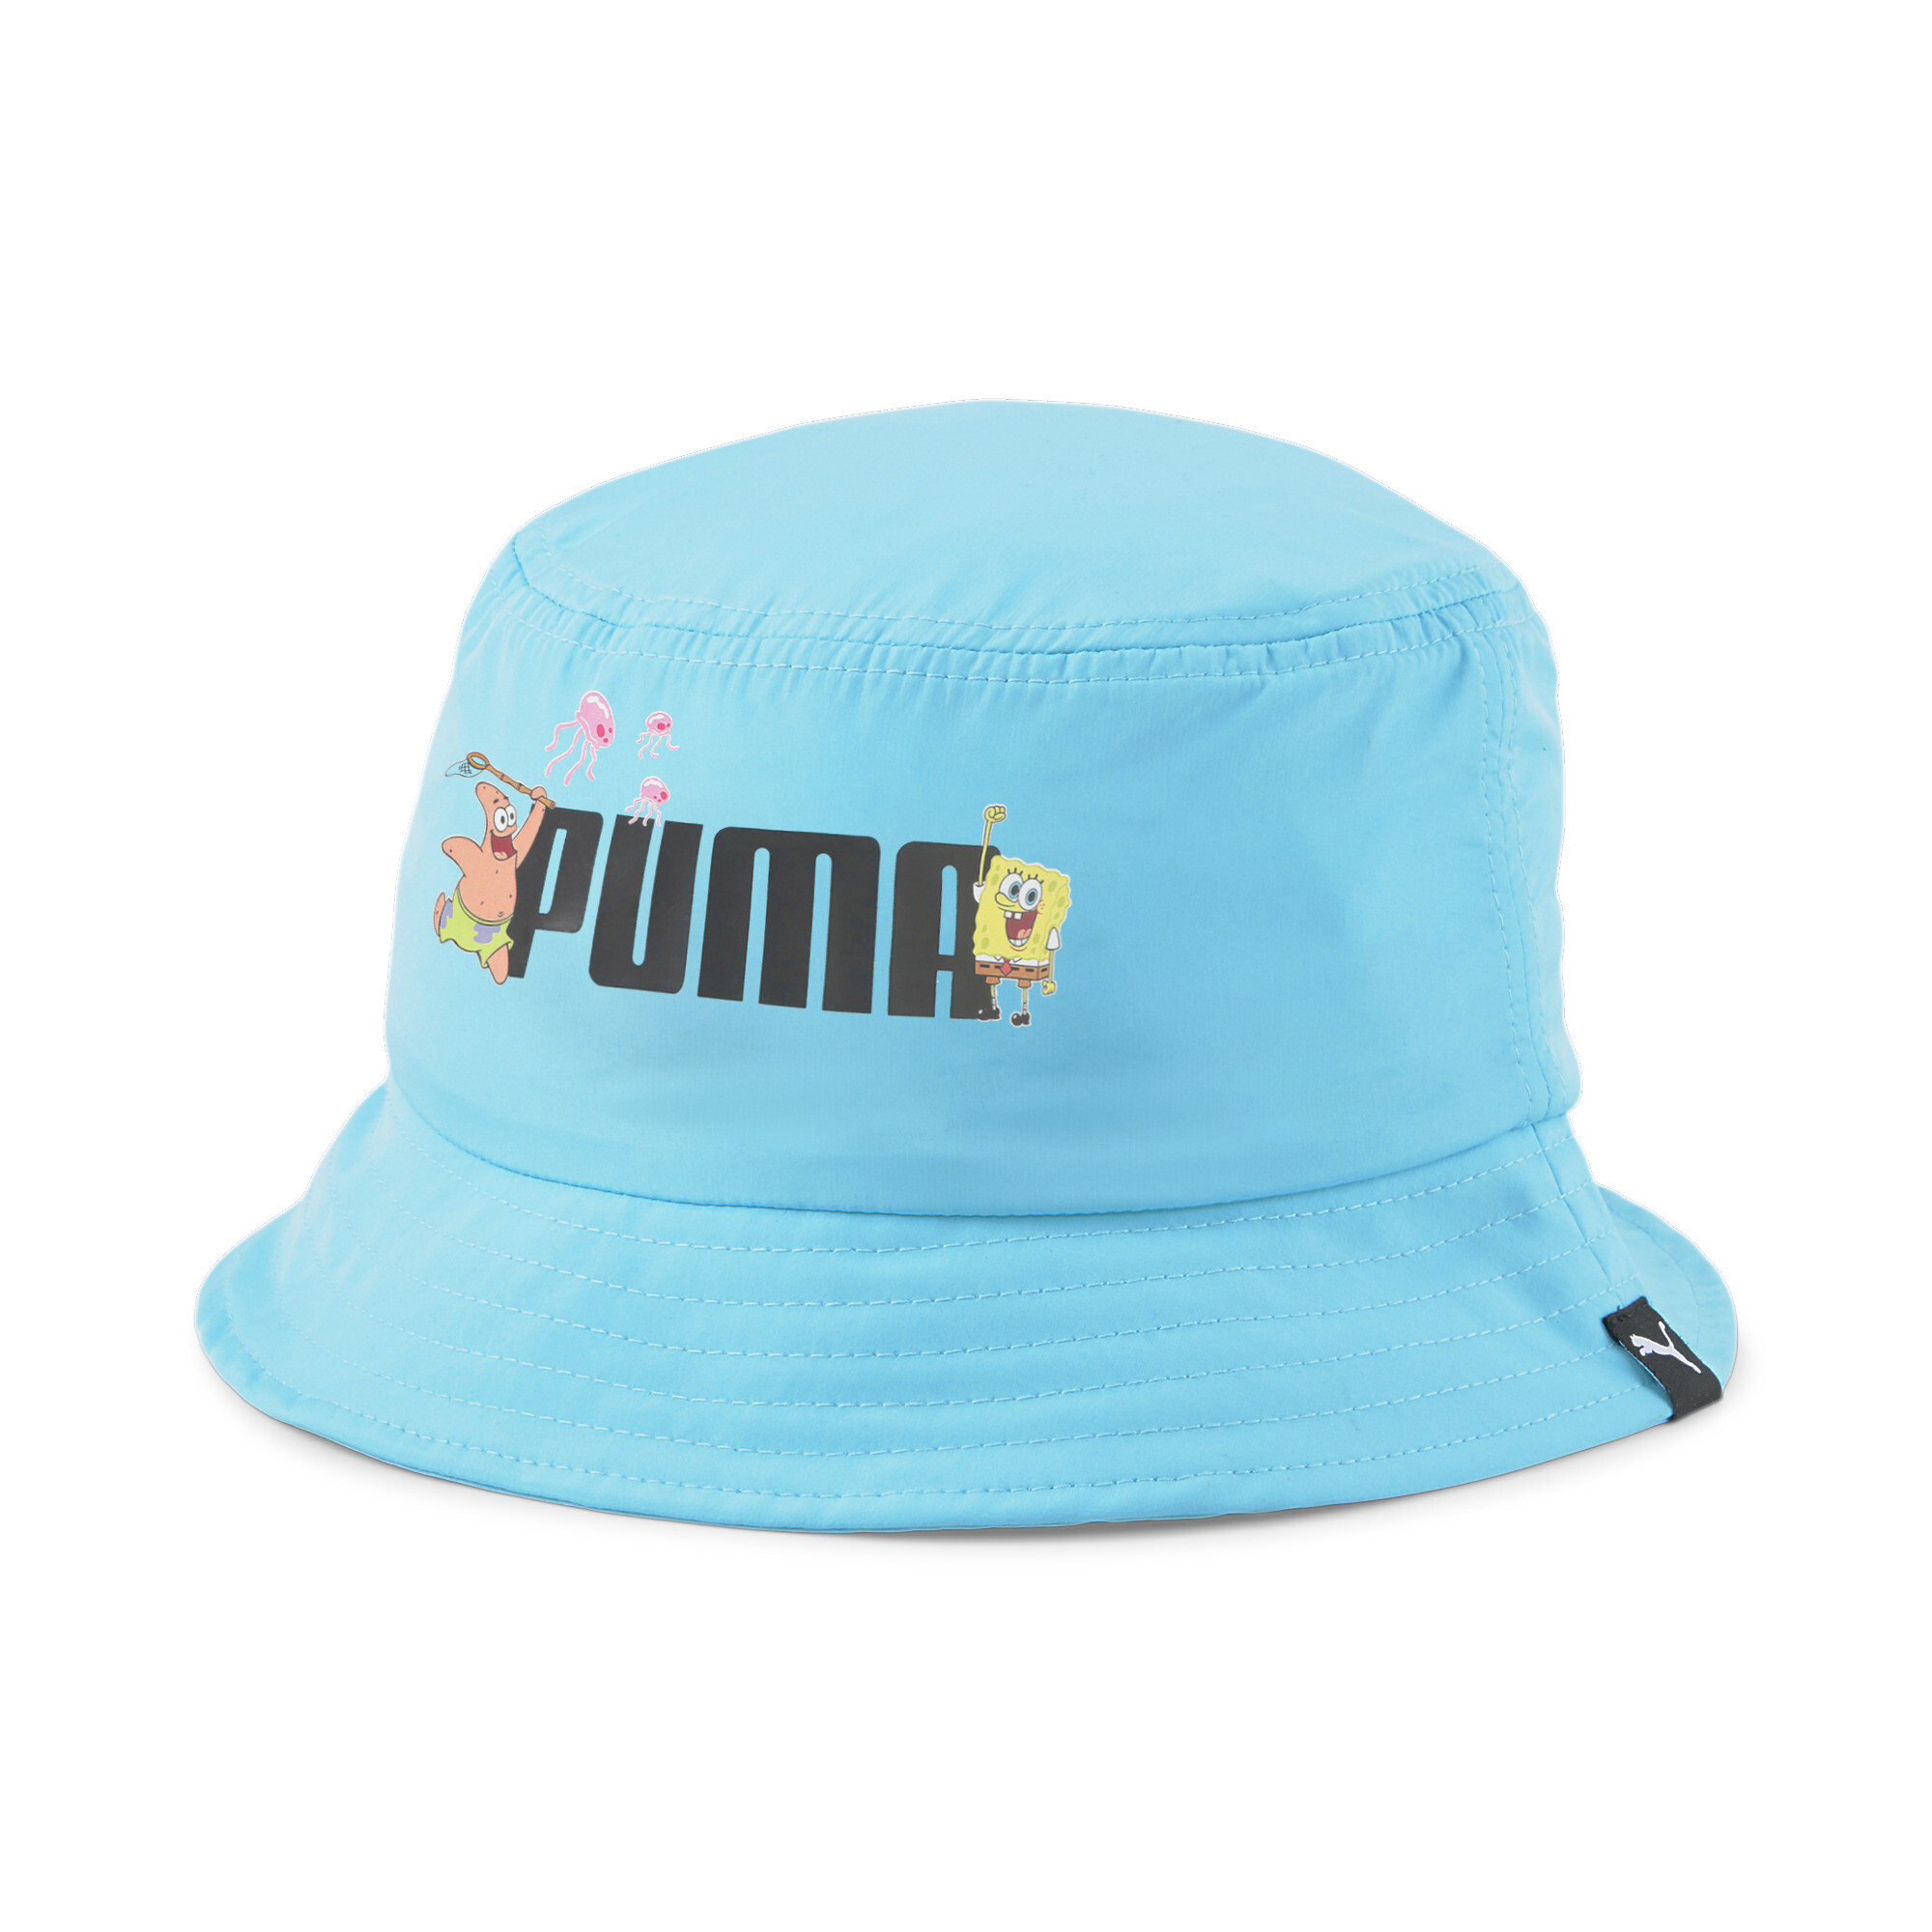 PUMA X SPONGEBOB Bucket Hat In Blue, Size Youth